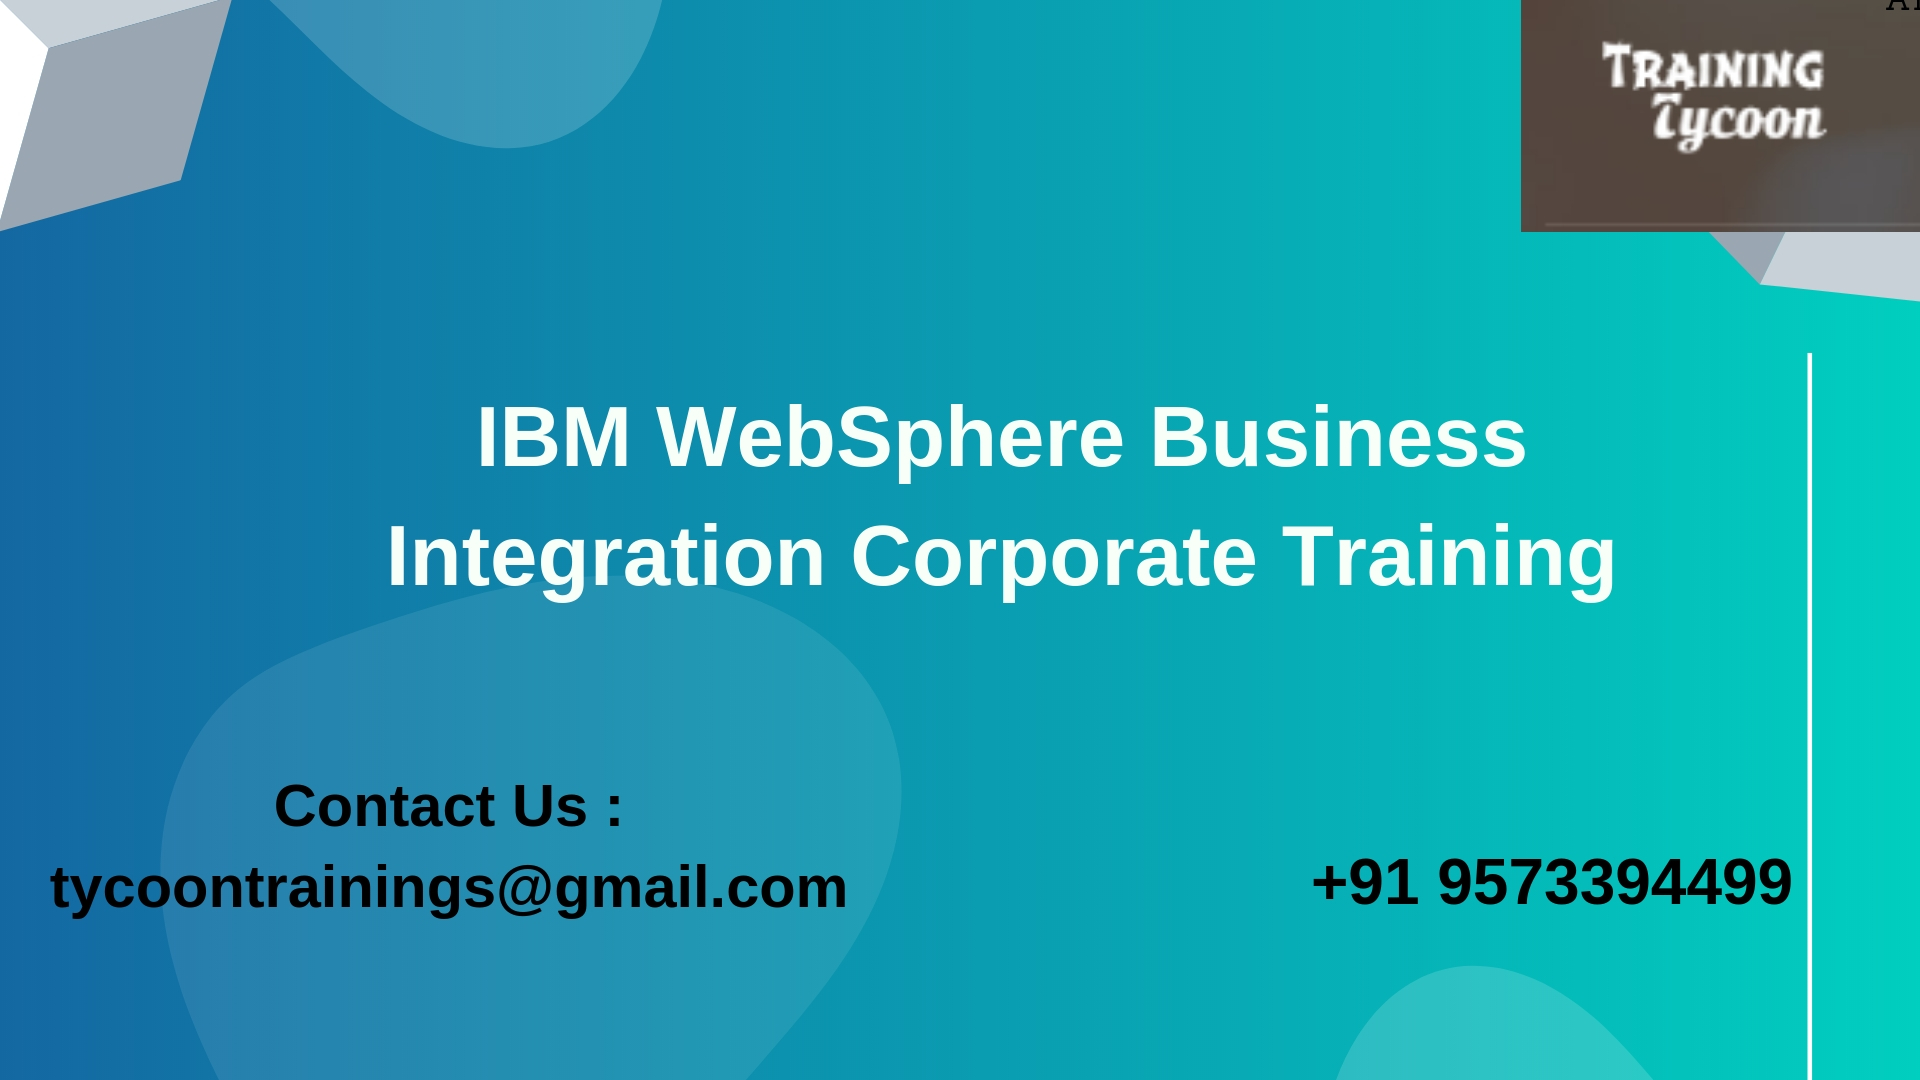 IBM WebSphere Business Integration Corporate Training-Training Tycoon, Hyderabad, Andhra Pradesh, India